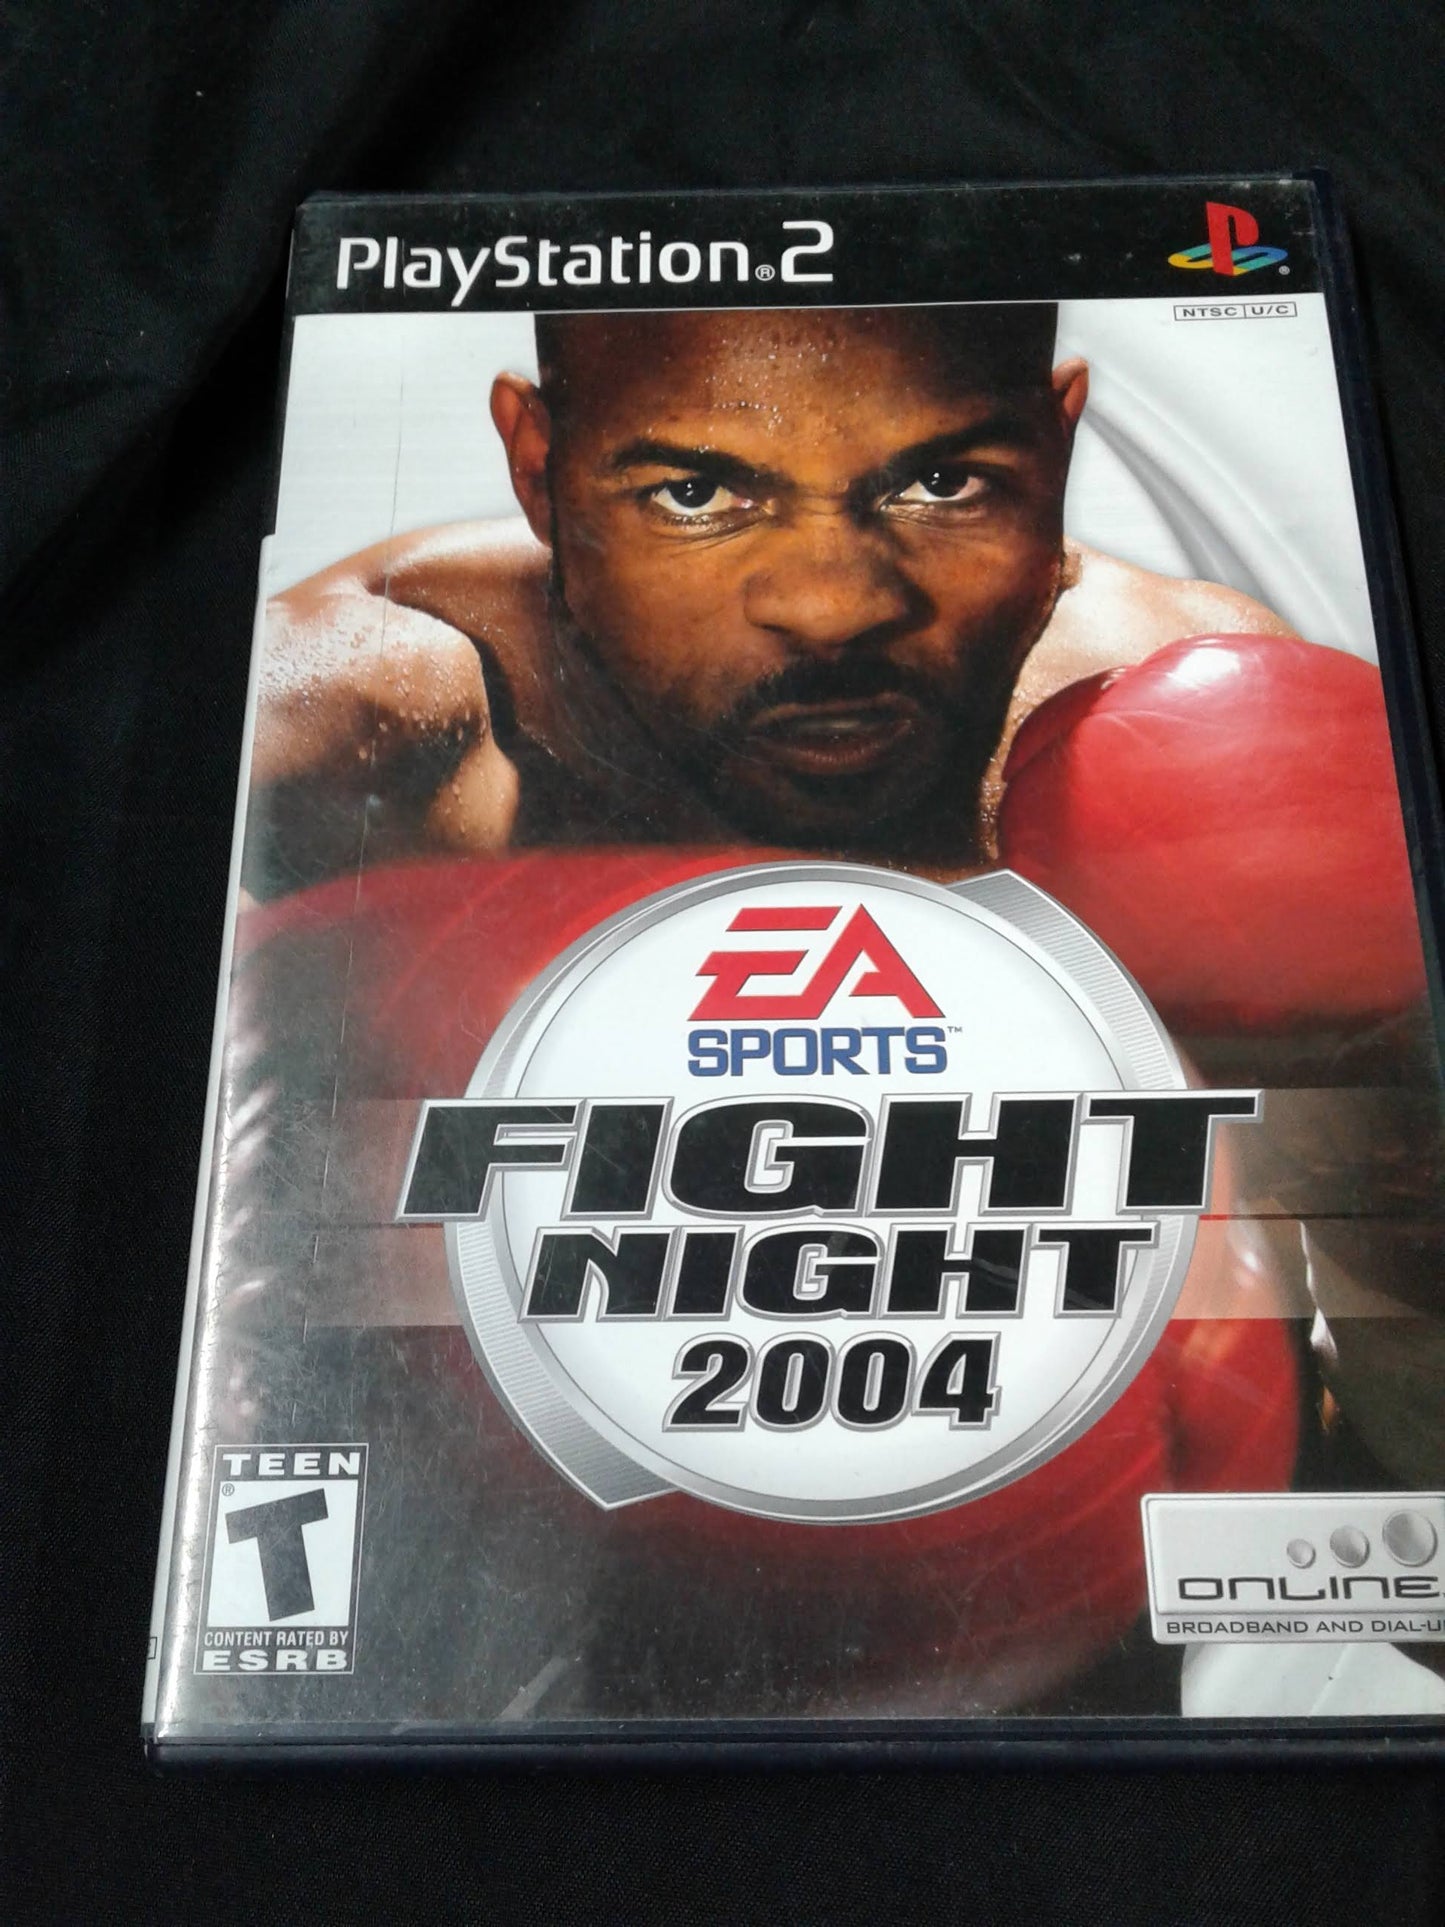 Playstation 2 Fight night 2004